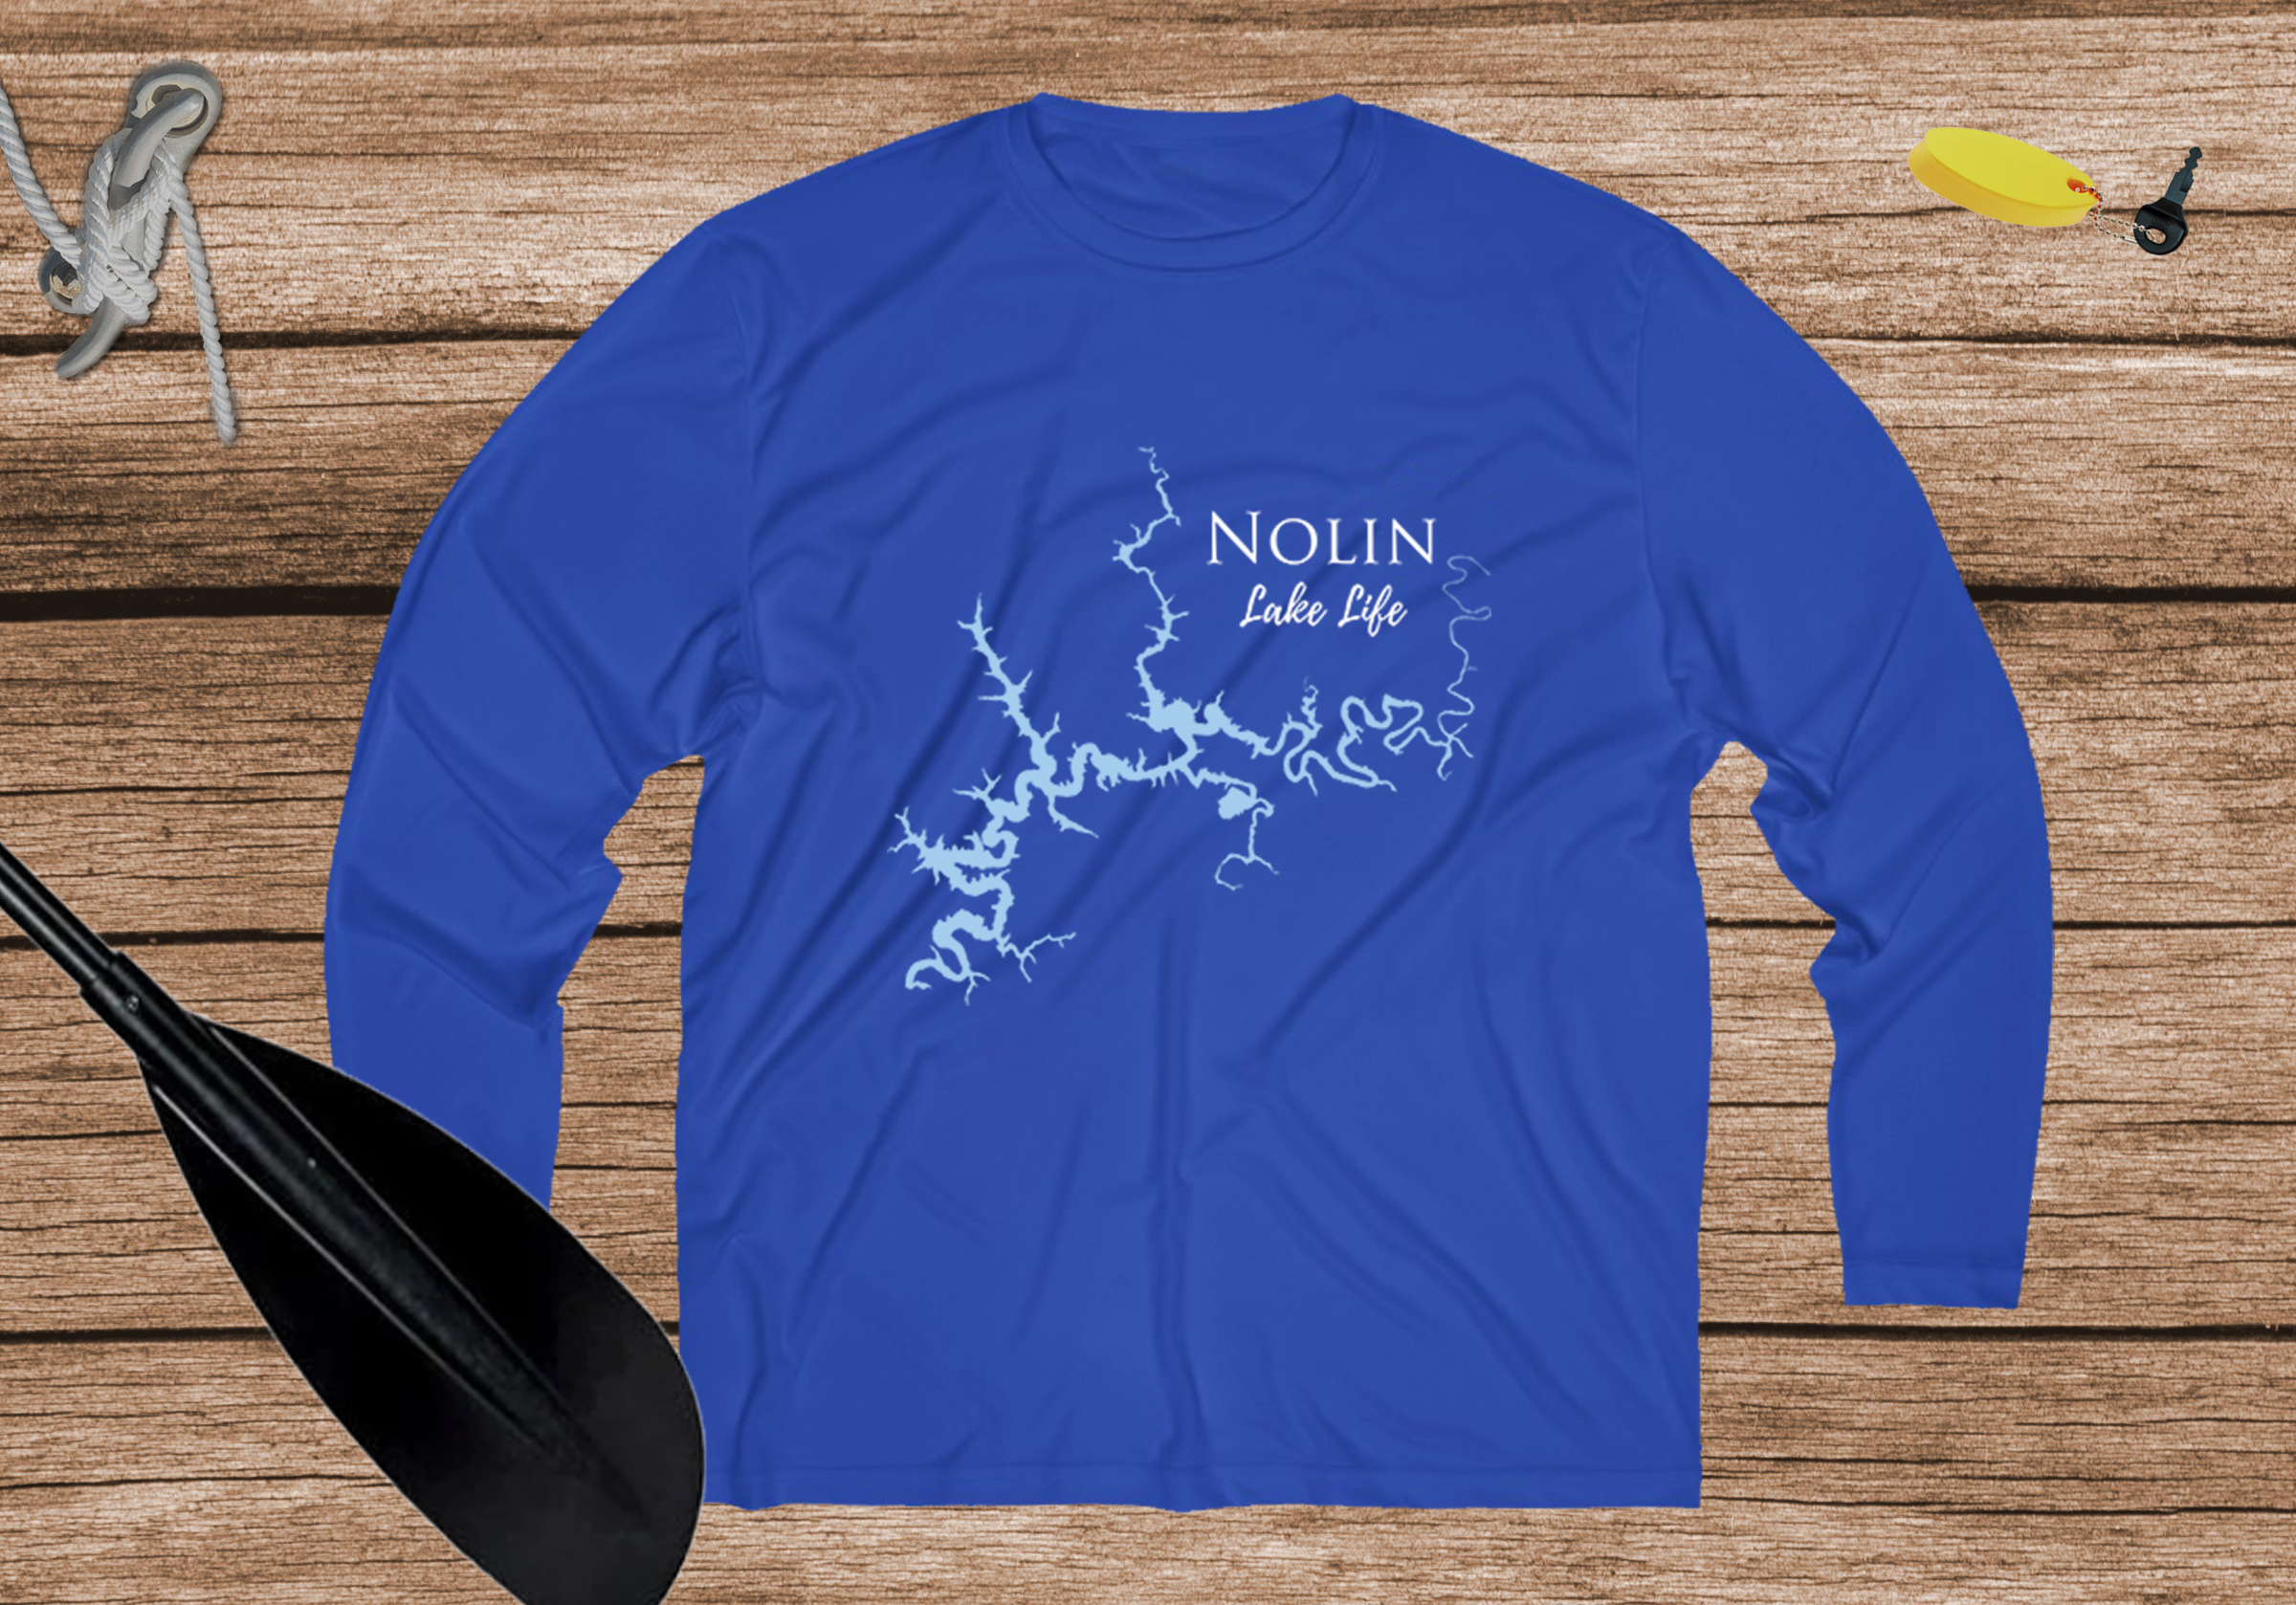 Nolin Lake Life Dri-fit Boating Shirt - Breathable Material- Men's Long Sleeve Moisture Wicking Tee - Kentucky Lake